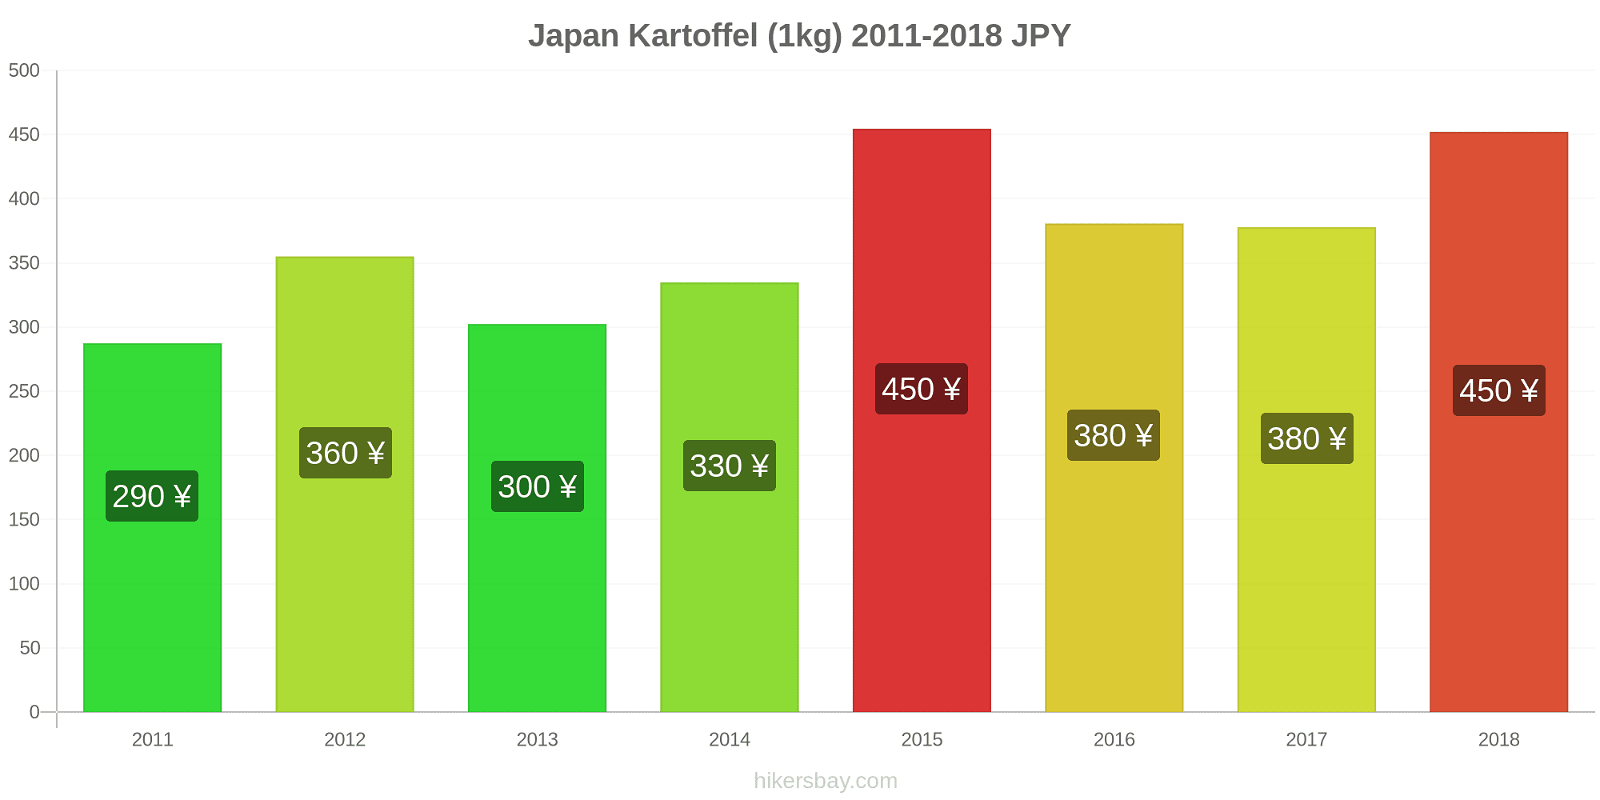 Japan Preisänderungen Kartoffeln (1kg) hikersbay.com